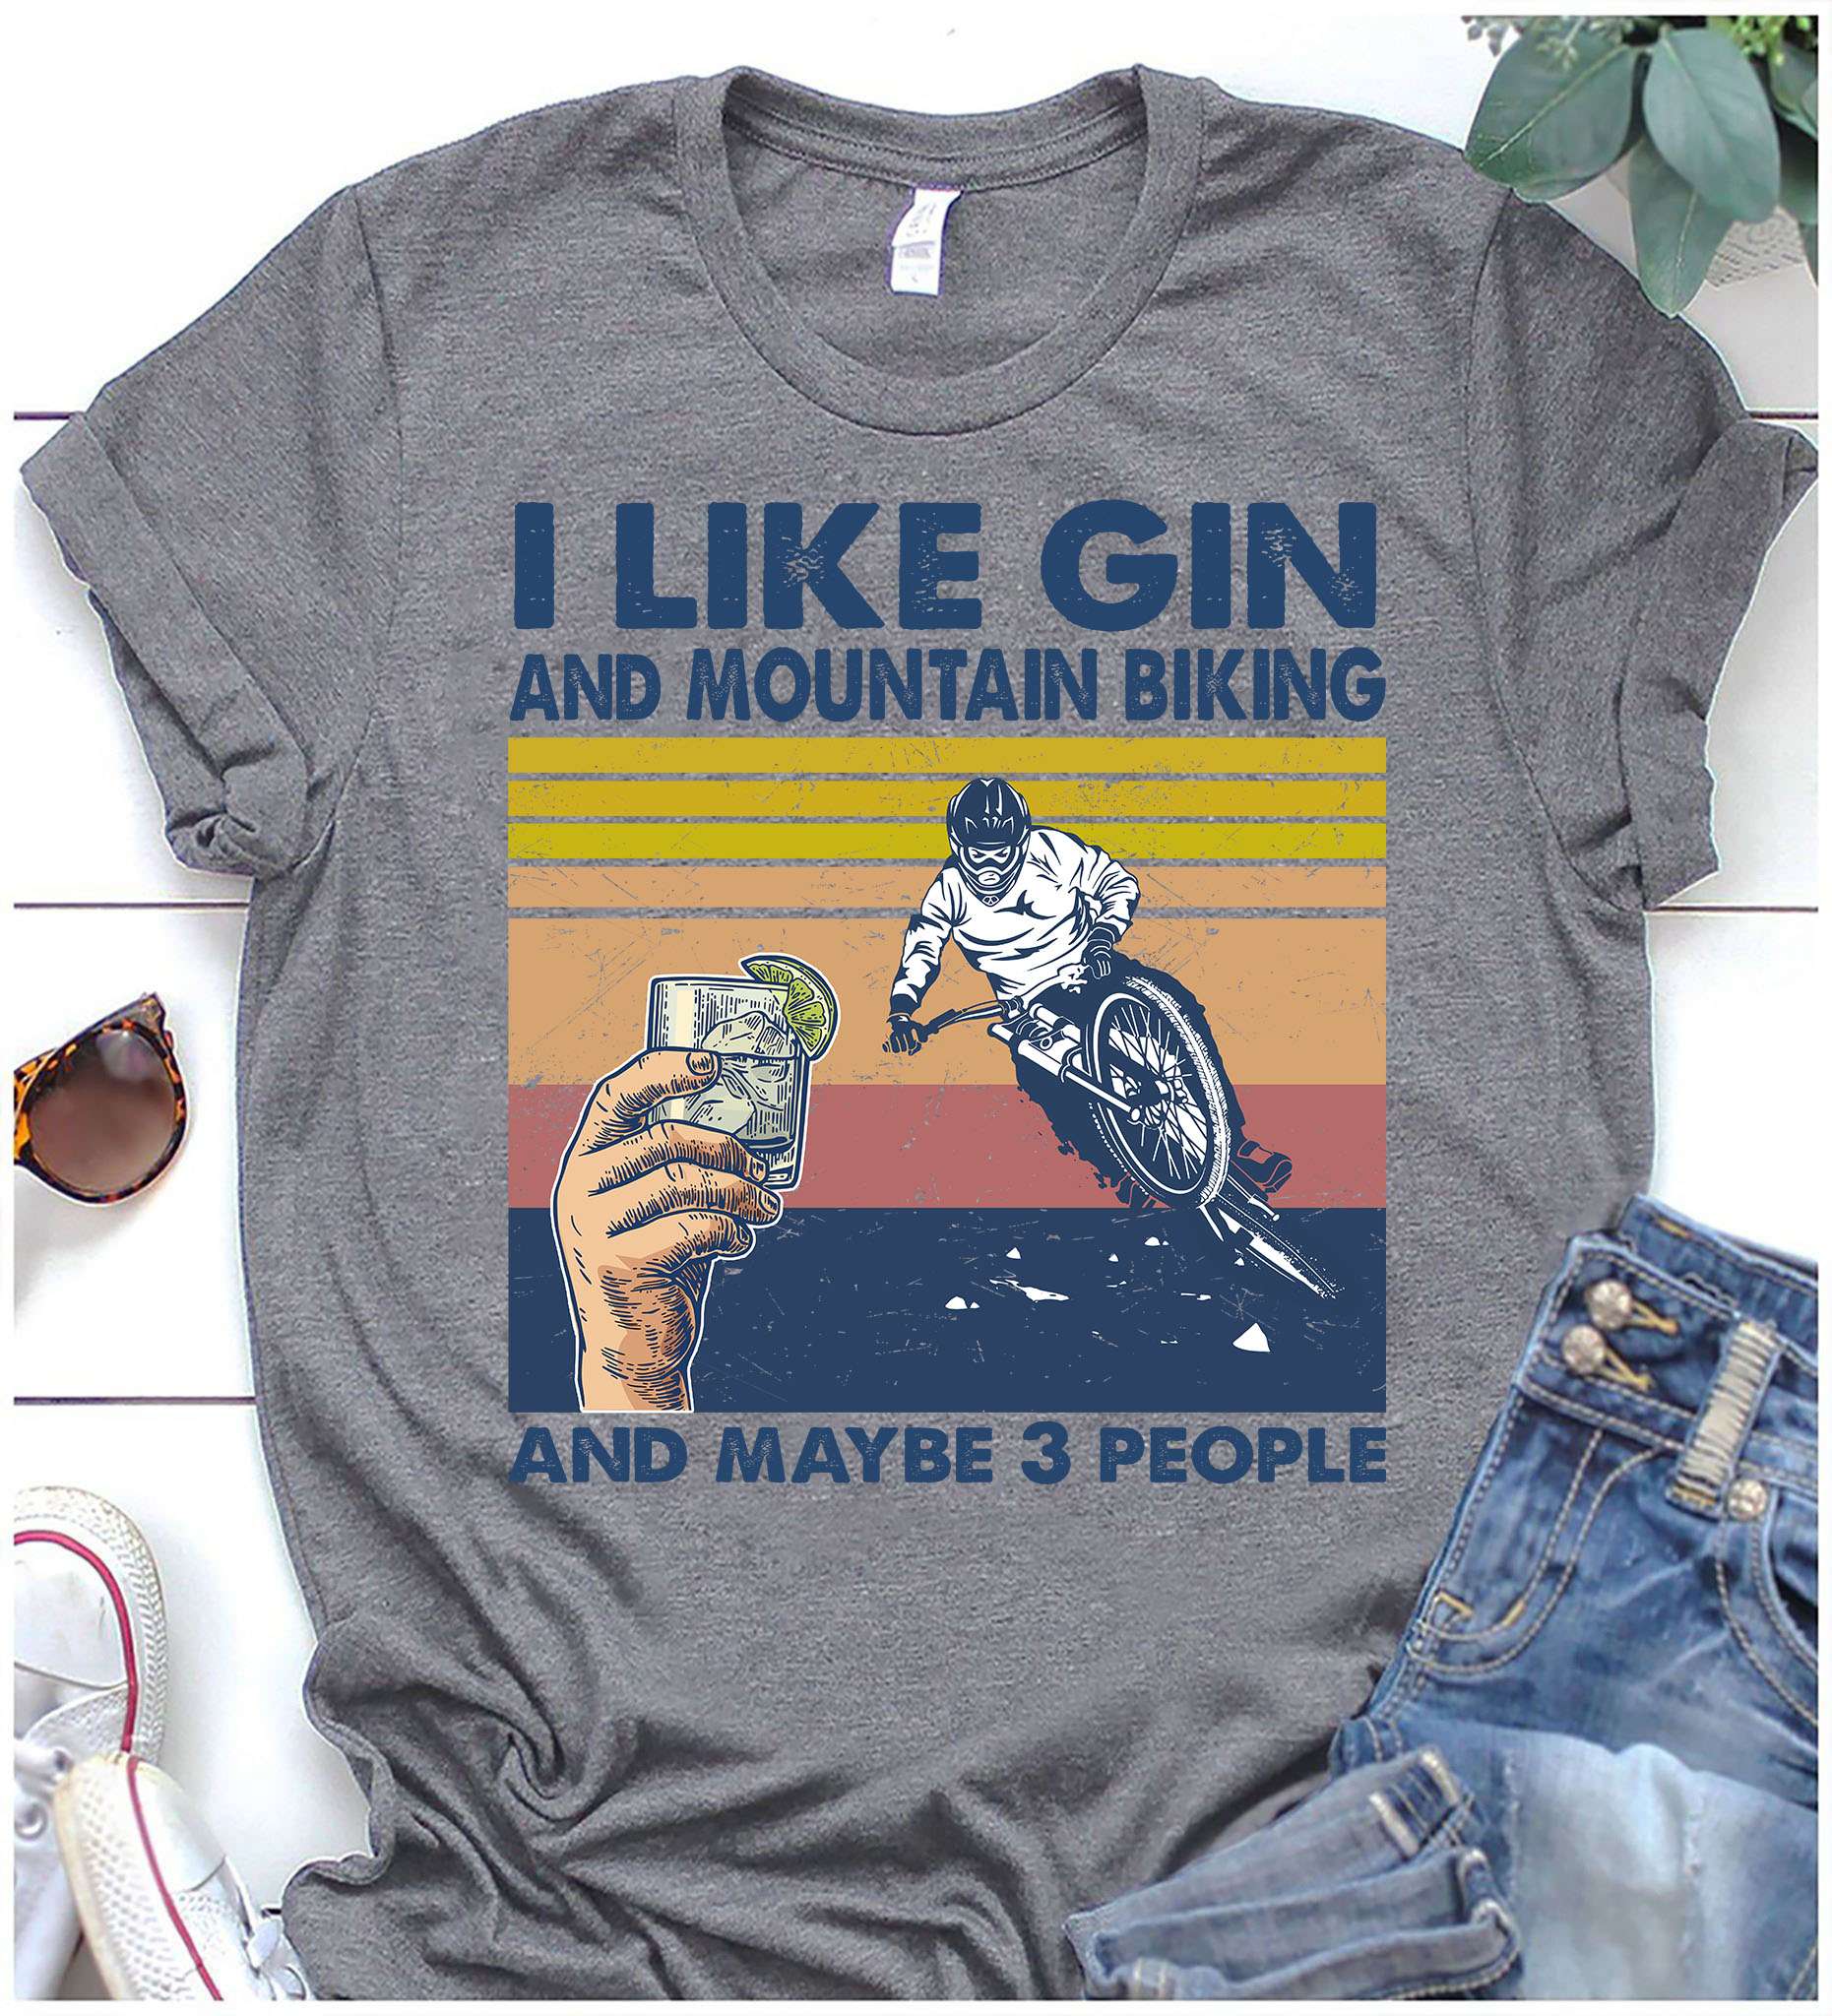 I like gin and mountain biking and maybe 3 people - Shot of gin, moutain biker